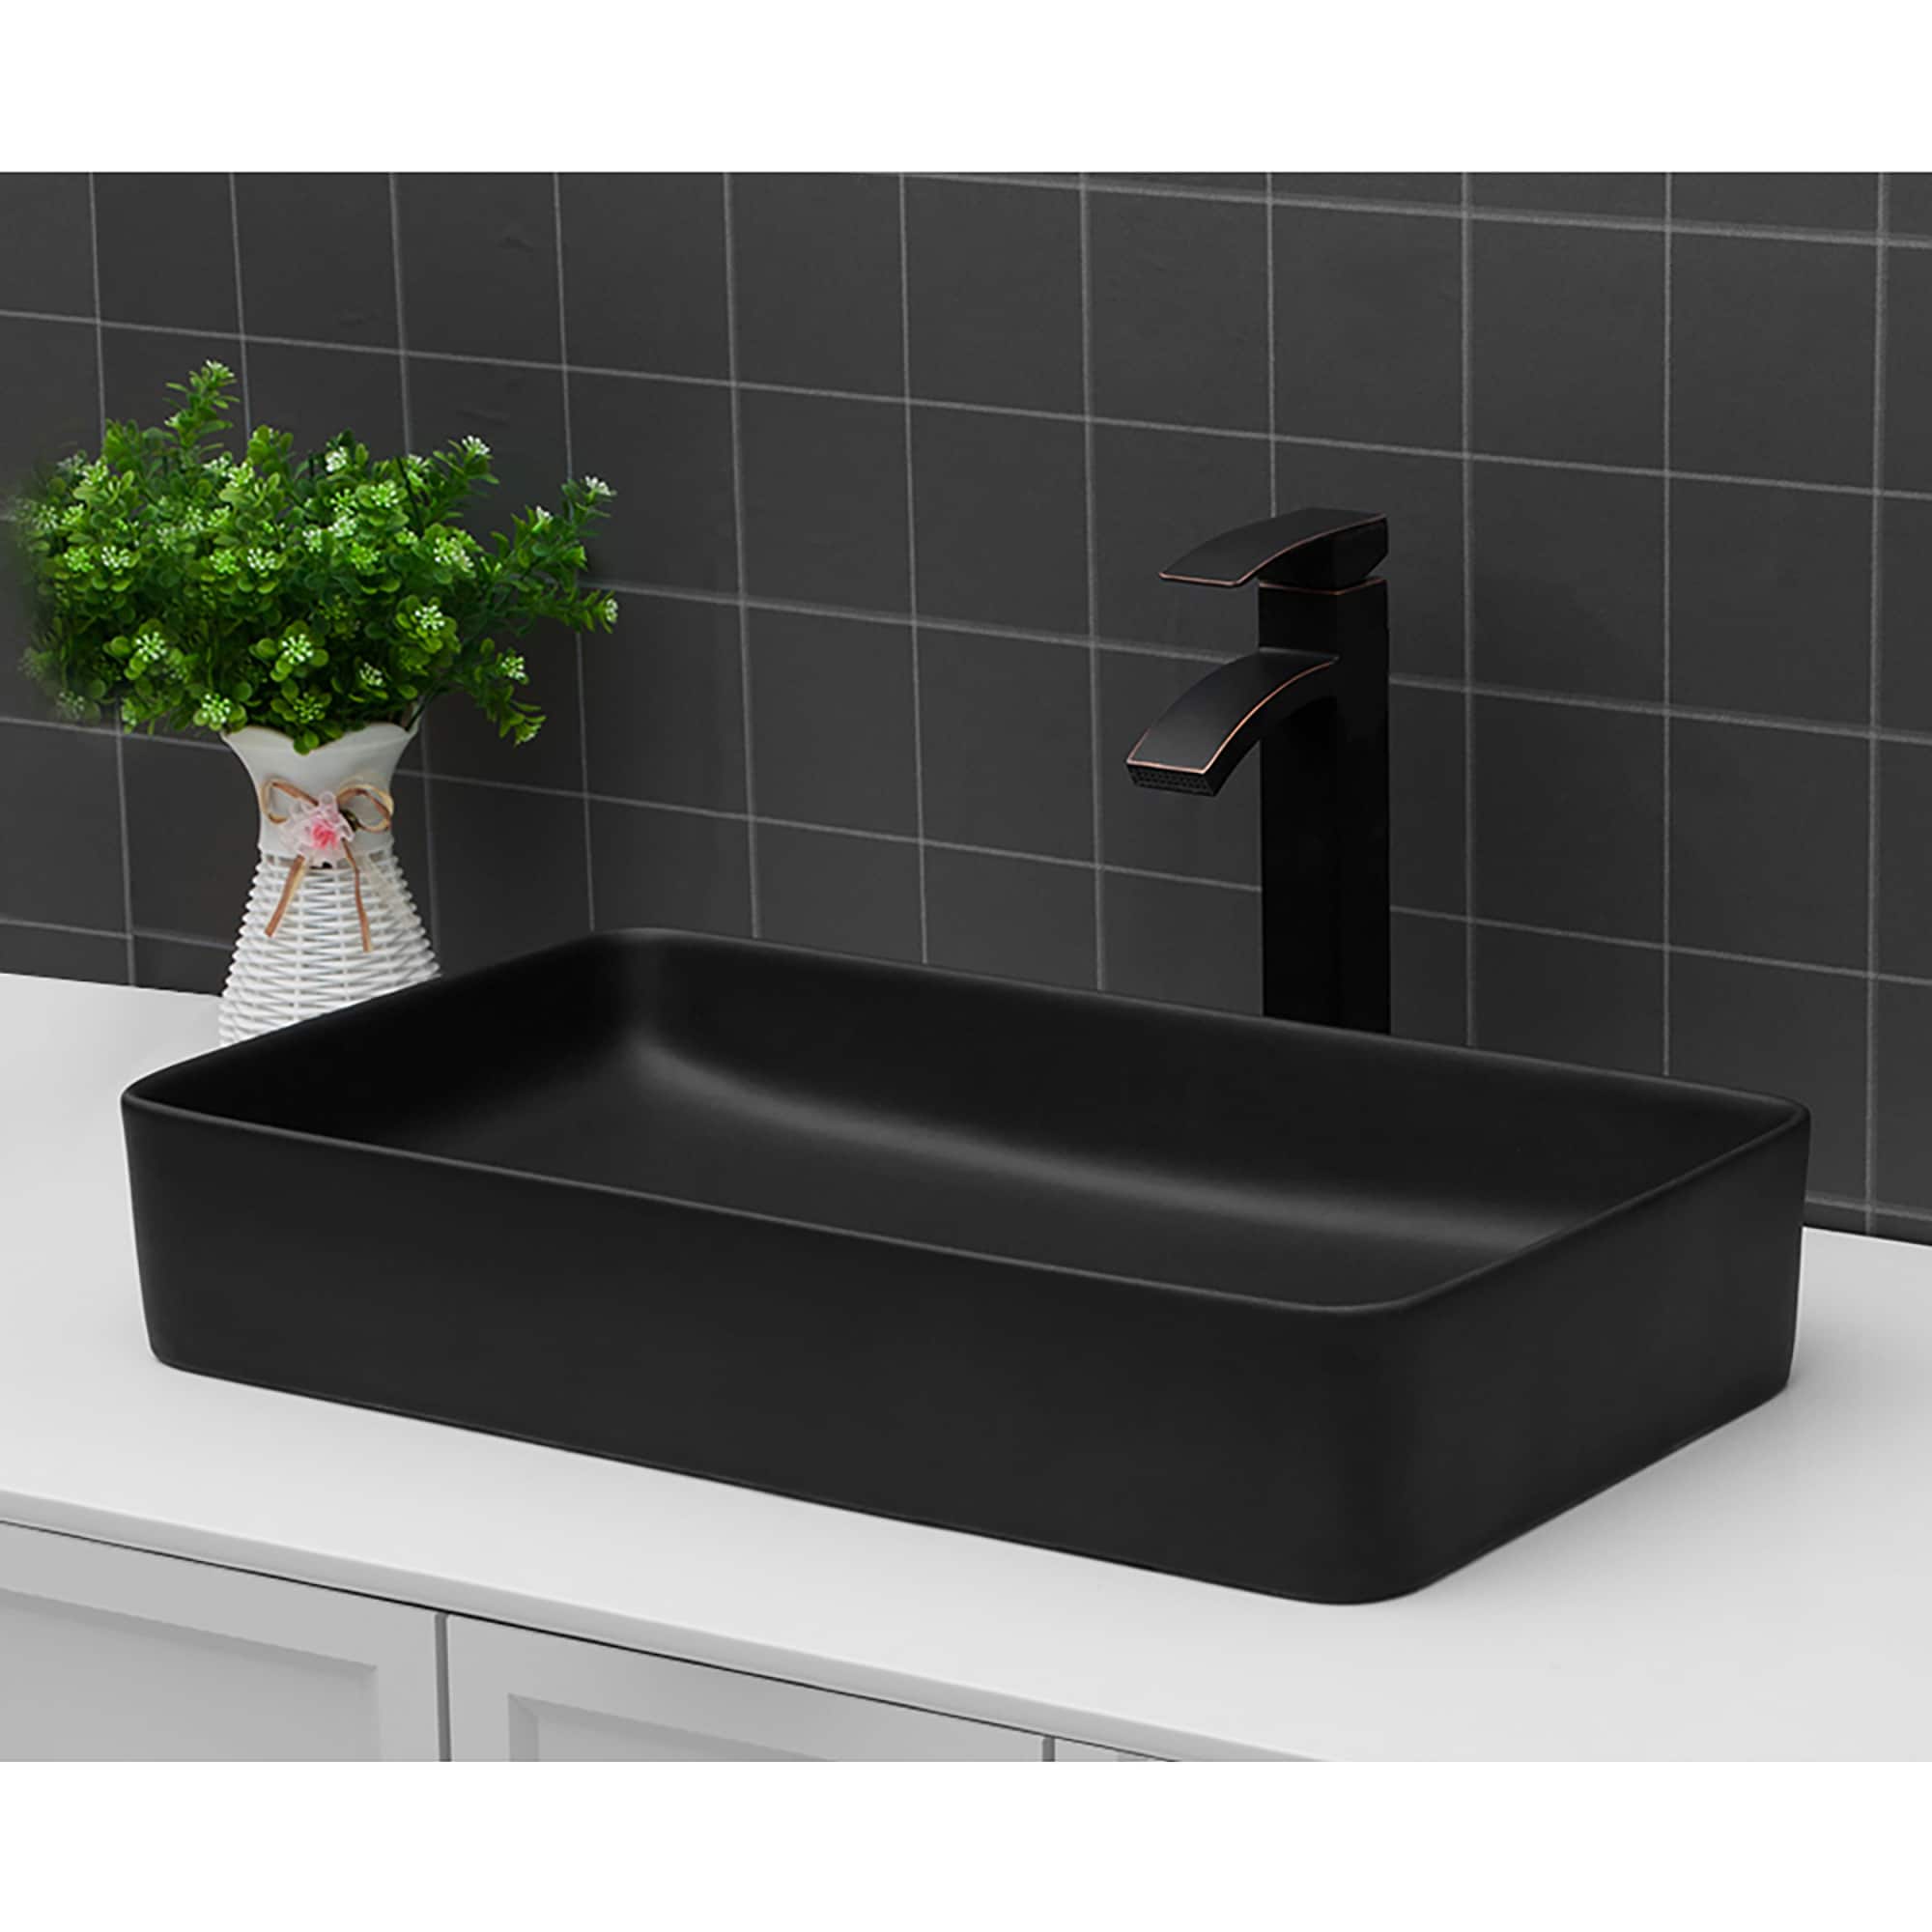 Black Bathroom Sinks at Lowes.com